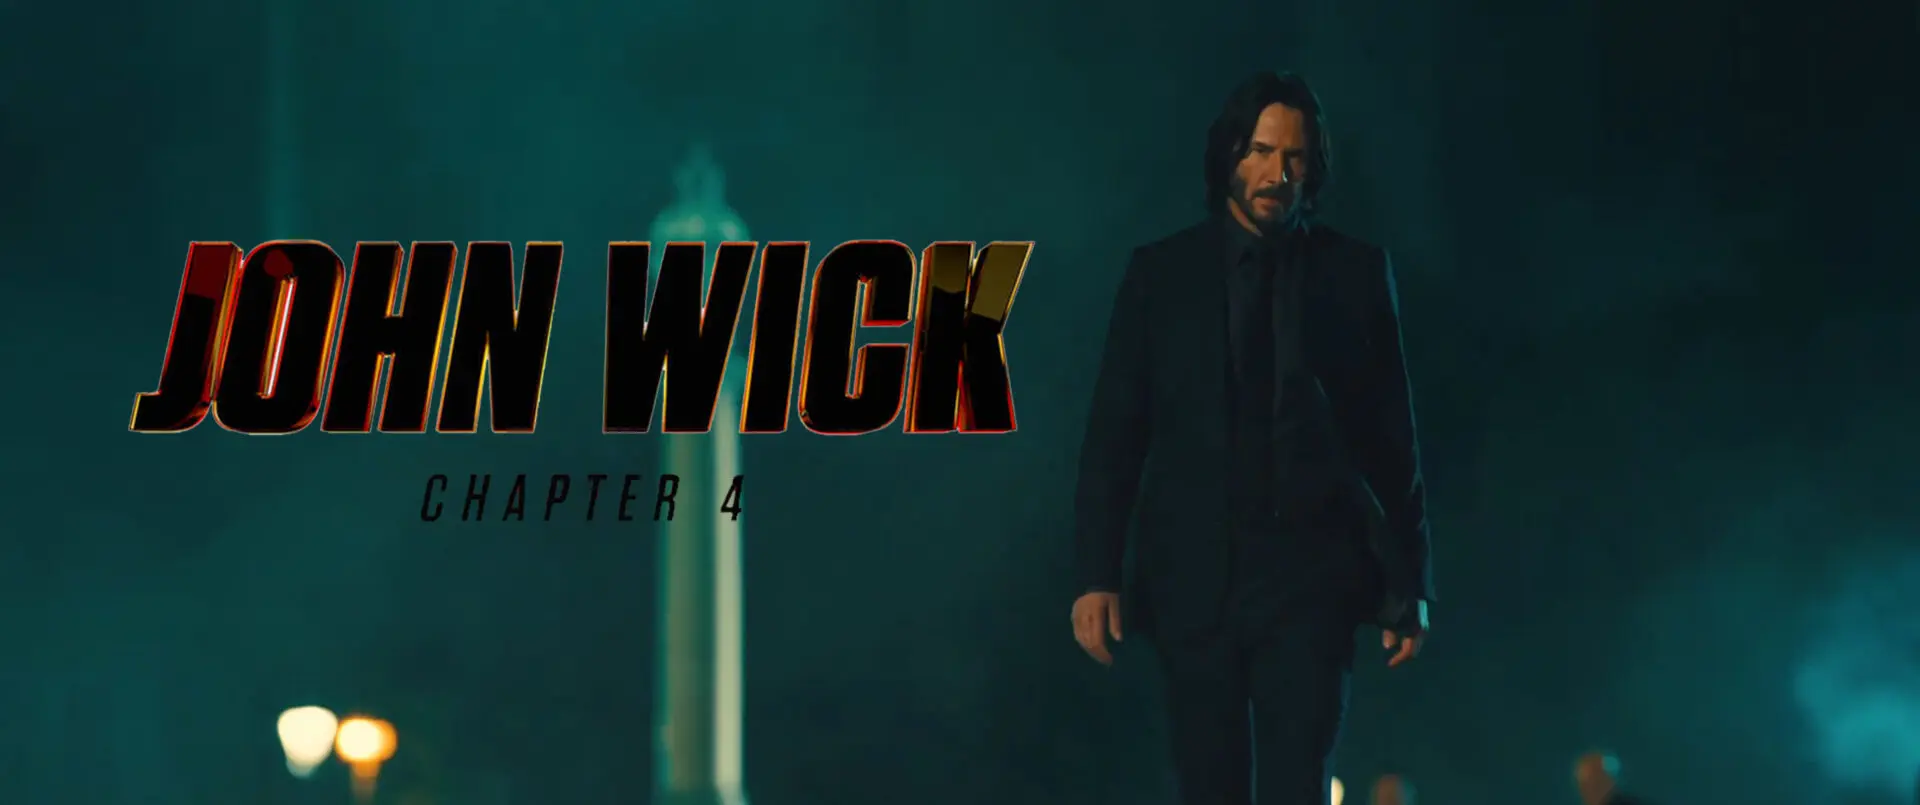 john wick 4 theatrical trailer banner1